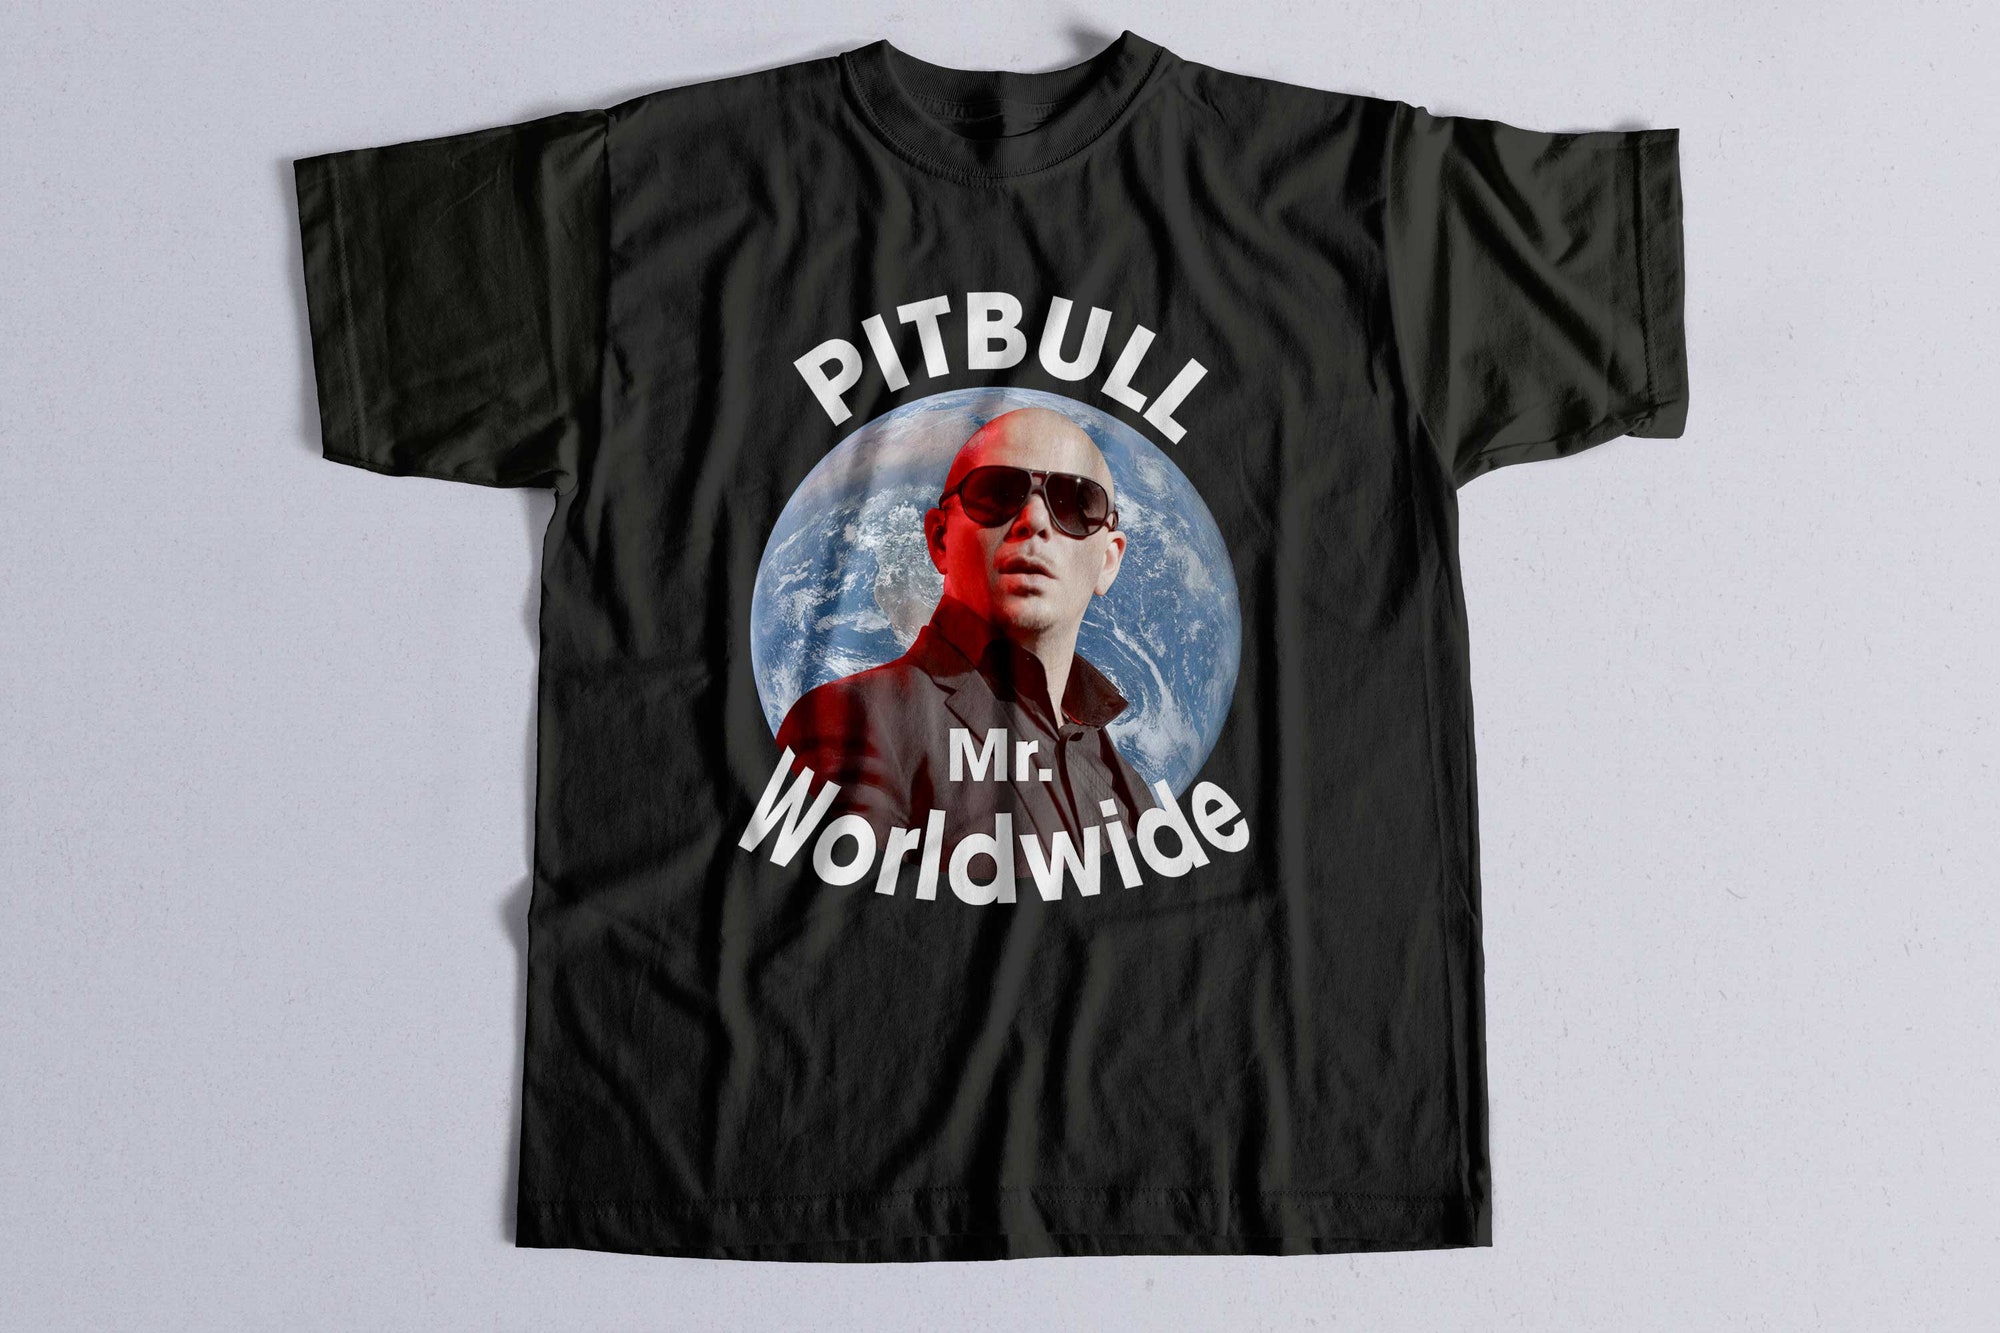 Discover Vintage Pitbull "Mr Worldwide" Shirt, Hip Hop Shirt, Vintage 90s Rap